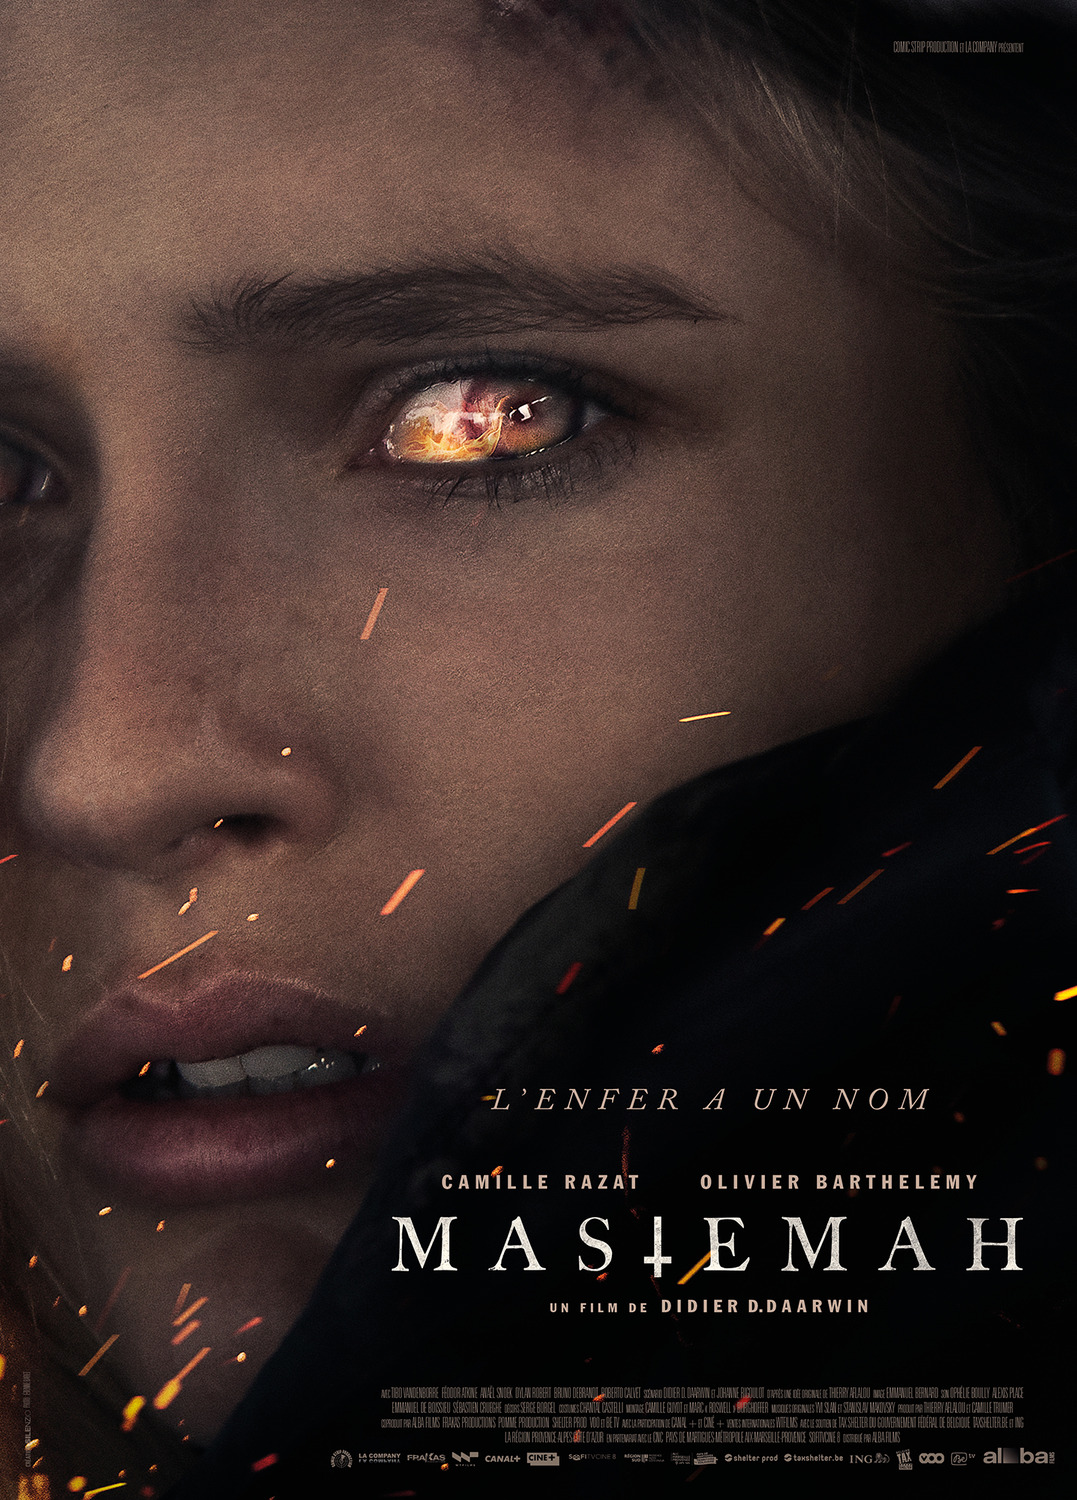 Extra Large Movie Poster Image for Mastemah 